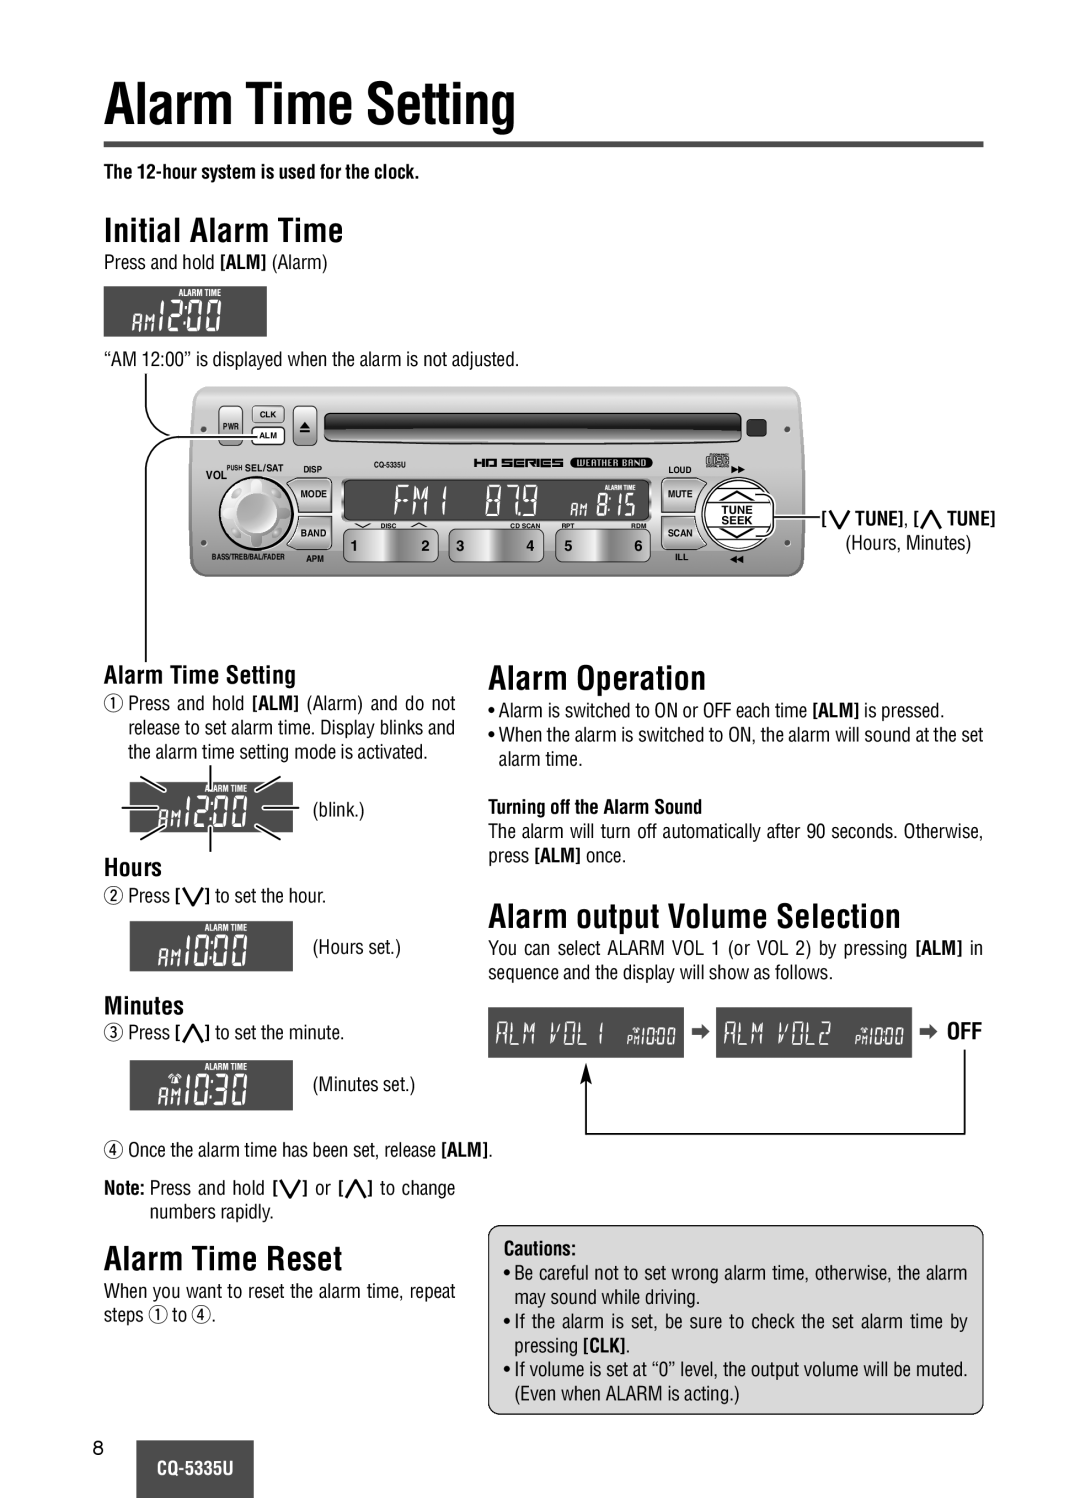 Panasonic CQ-5335U Alarm Time Setting, Initial Alarm Time, Alarm Operation, Alarm output Volume Selection, Hours, Minutes 